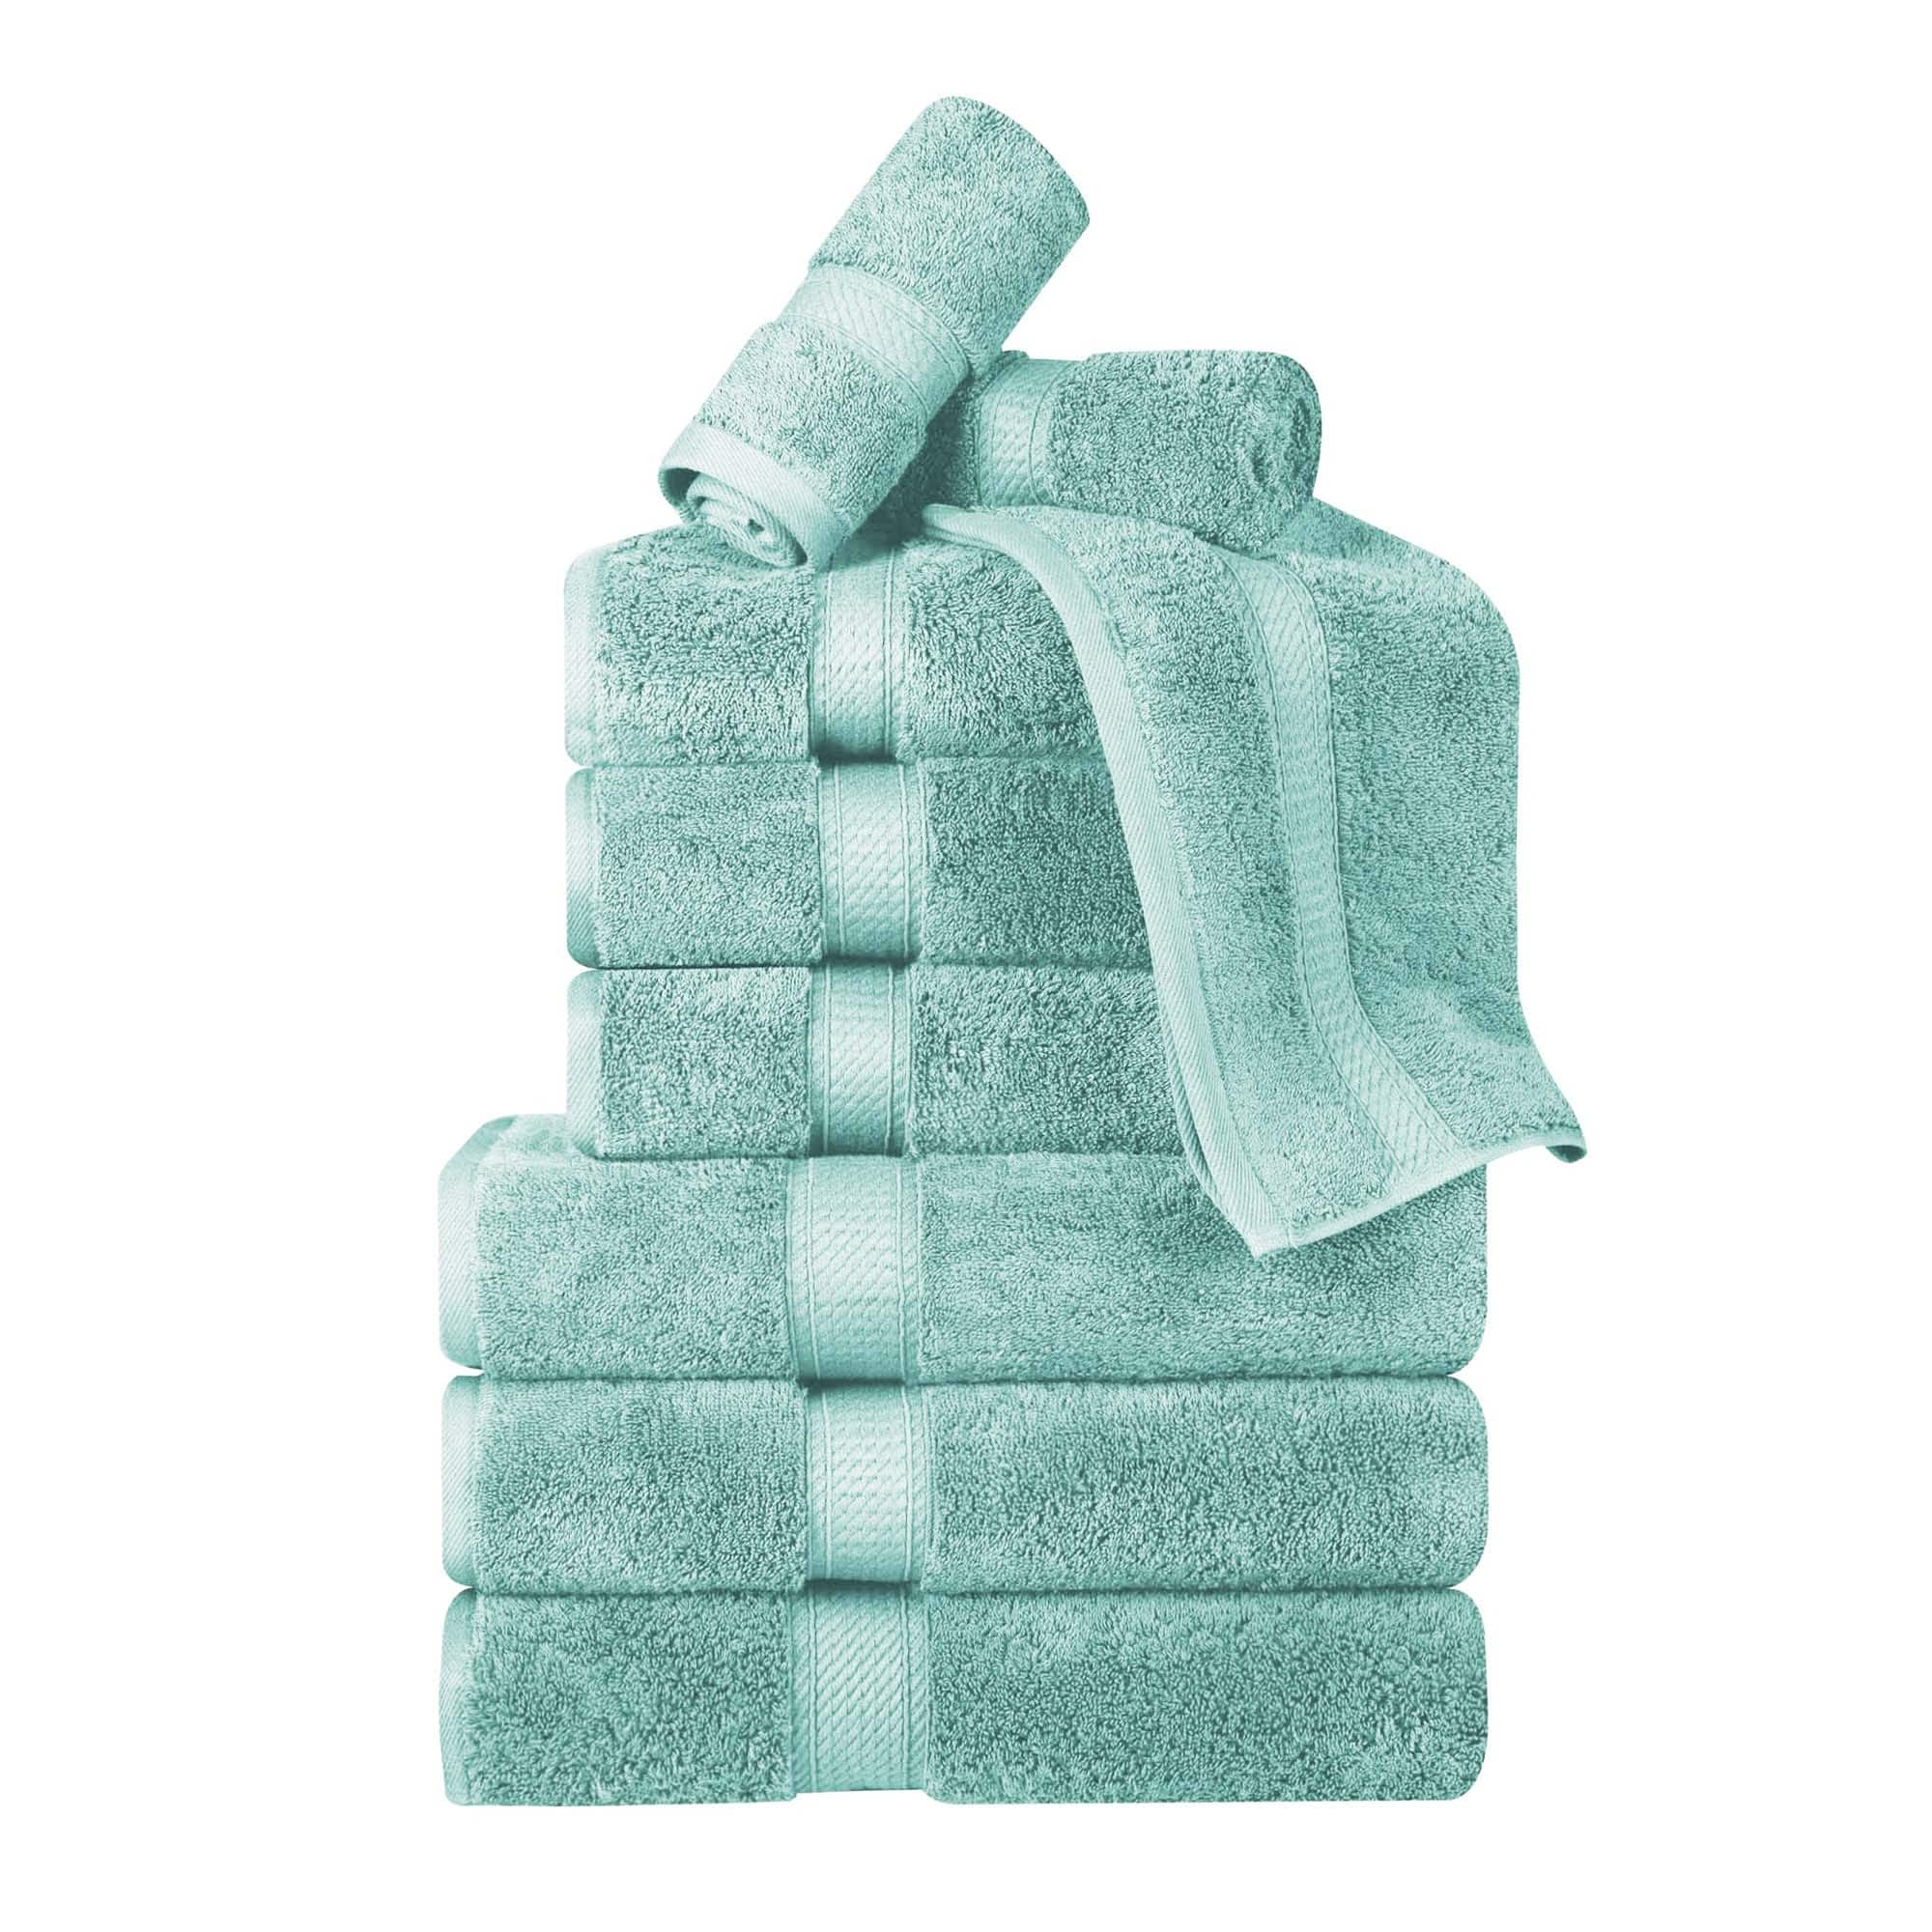 Premium Cotton 800 Gsm Heavyweight Plush Luxury 9 Piece Bathroom Towel Set,  Cream - Blue Nile Mills : Target